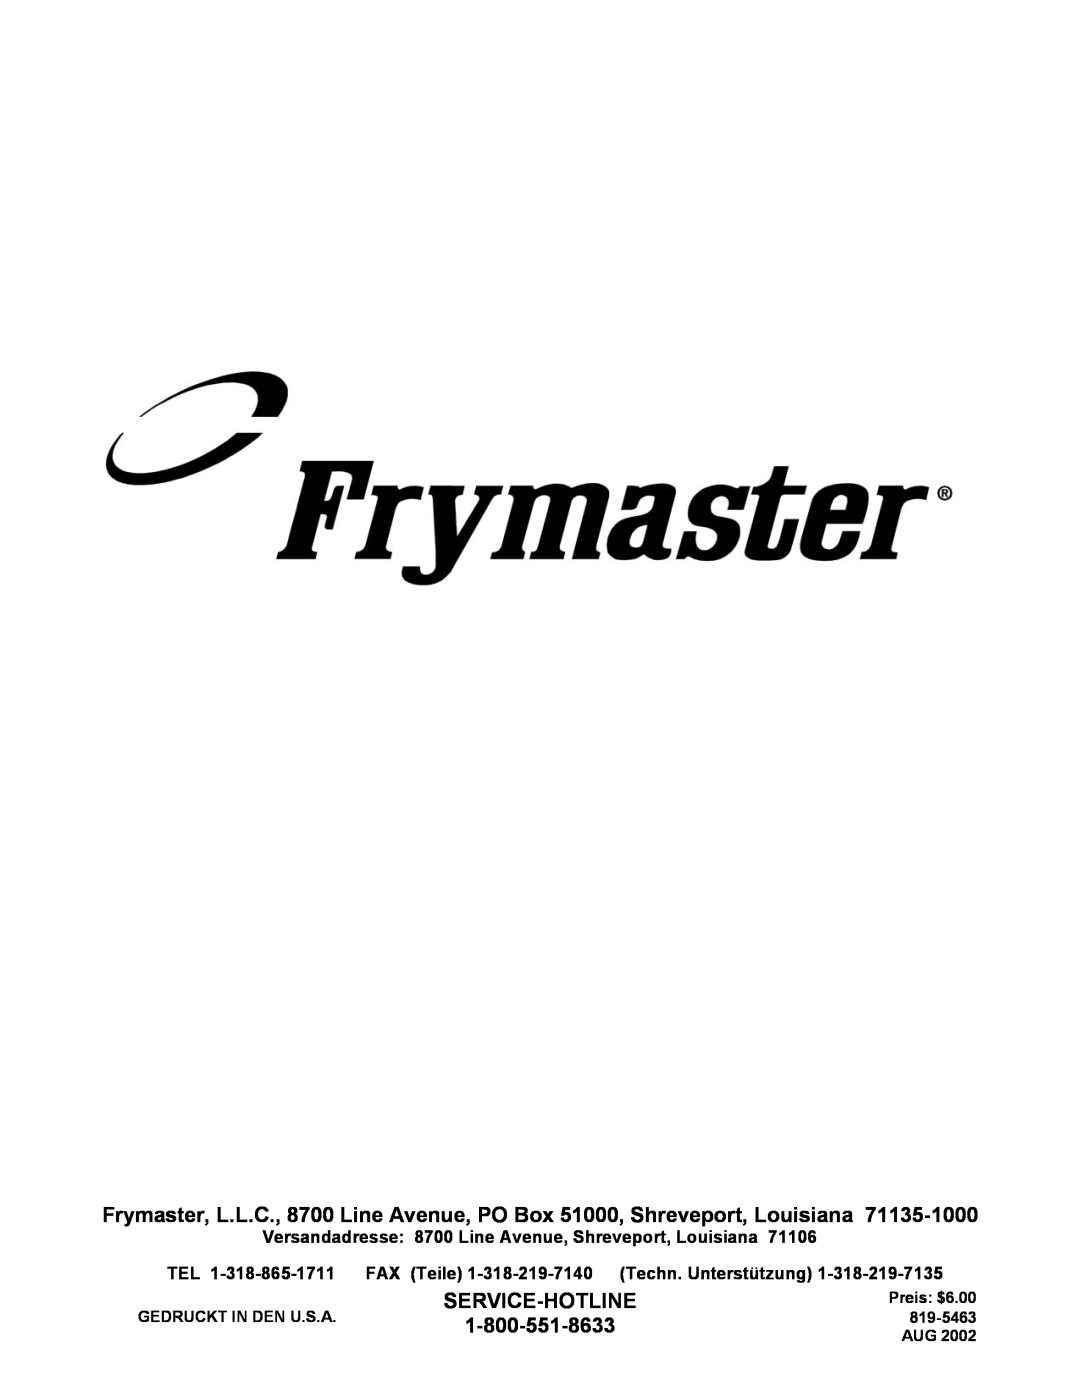 Frymaster Series H50 manual FAX Teile 1-318-219-7140Techn. Unterstützung, Gedruckt In Den U.S.A, Preis $6.00 819-5463AUG 